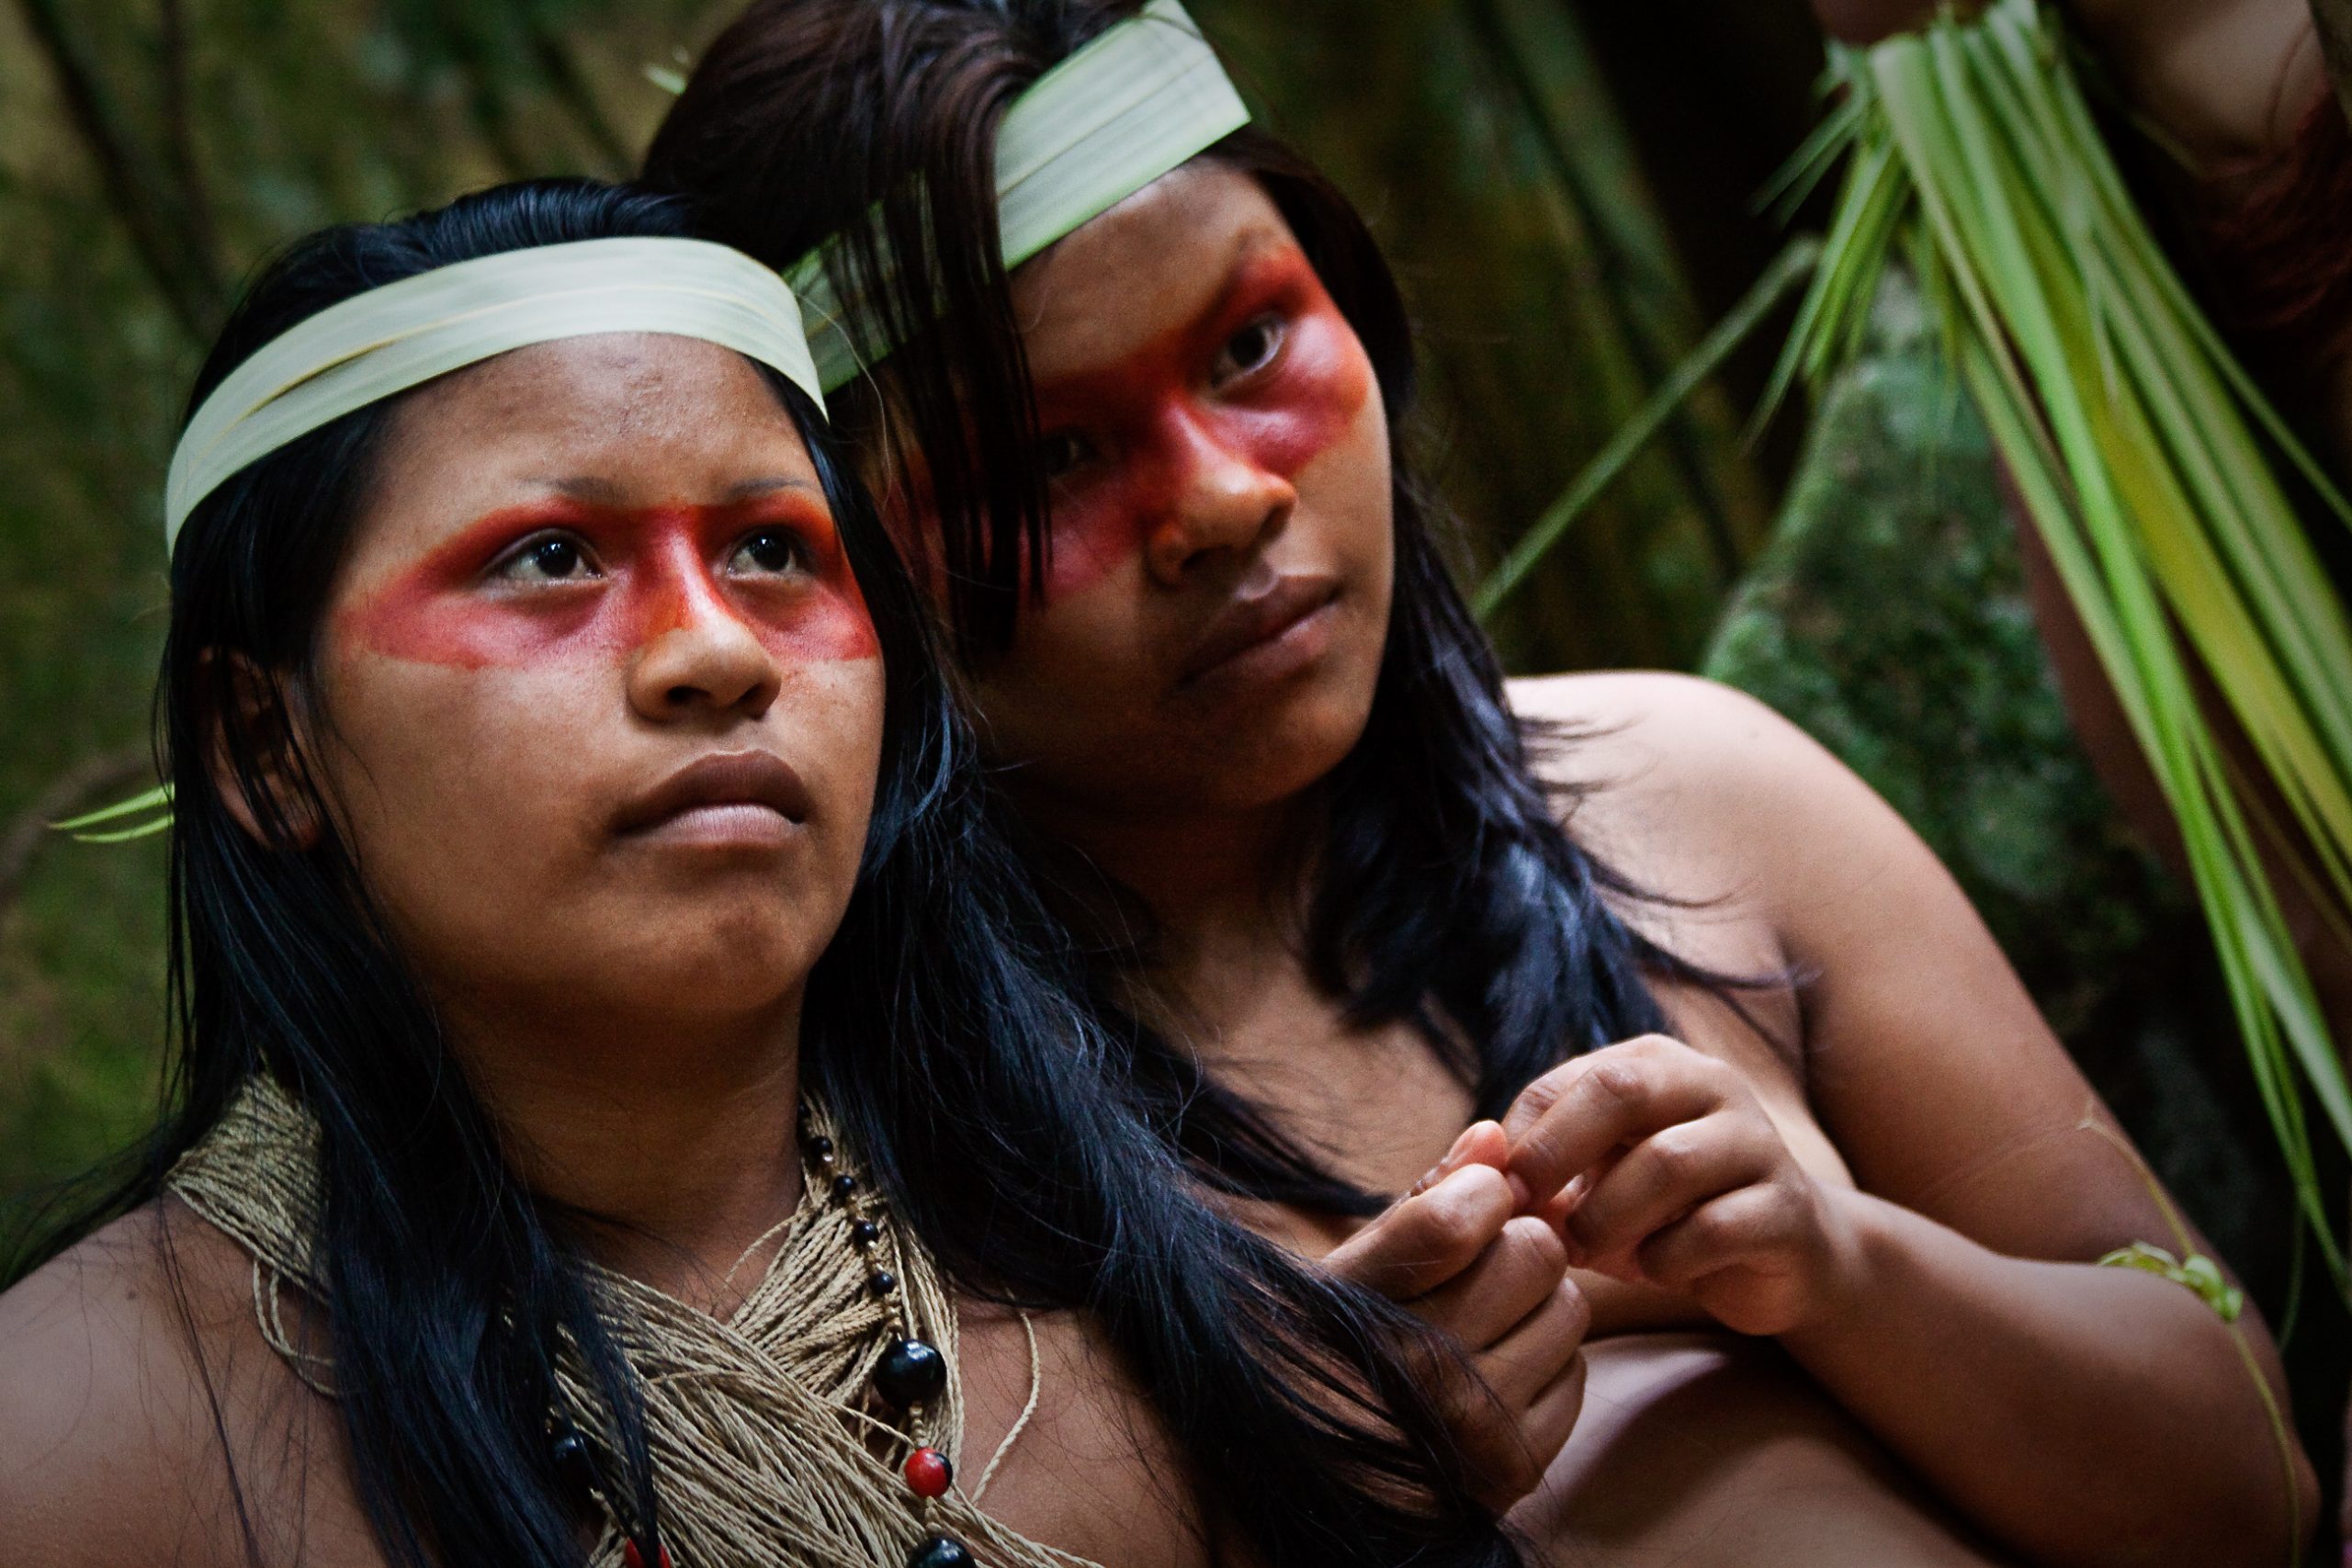 ORELLANA, ECUADOR - AUGUST 10, 2012: Two young girls form huaorani tribe in the amazon rainforest, Yasuni National Park, Ecuador